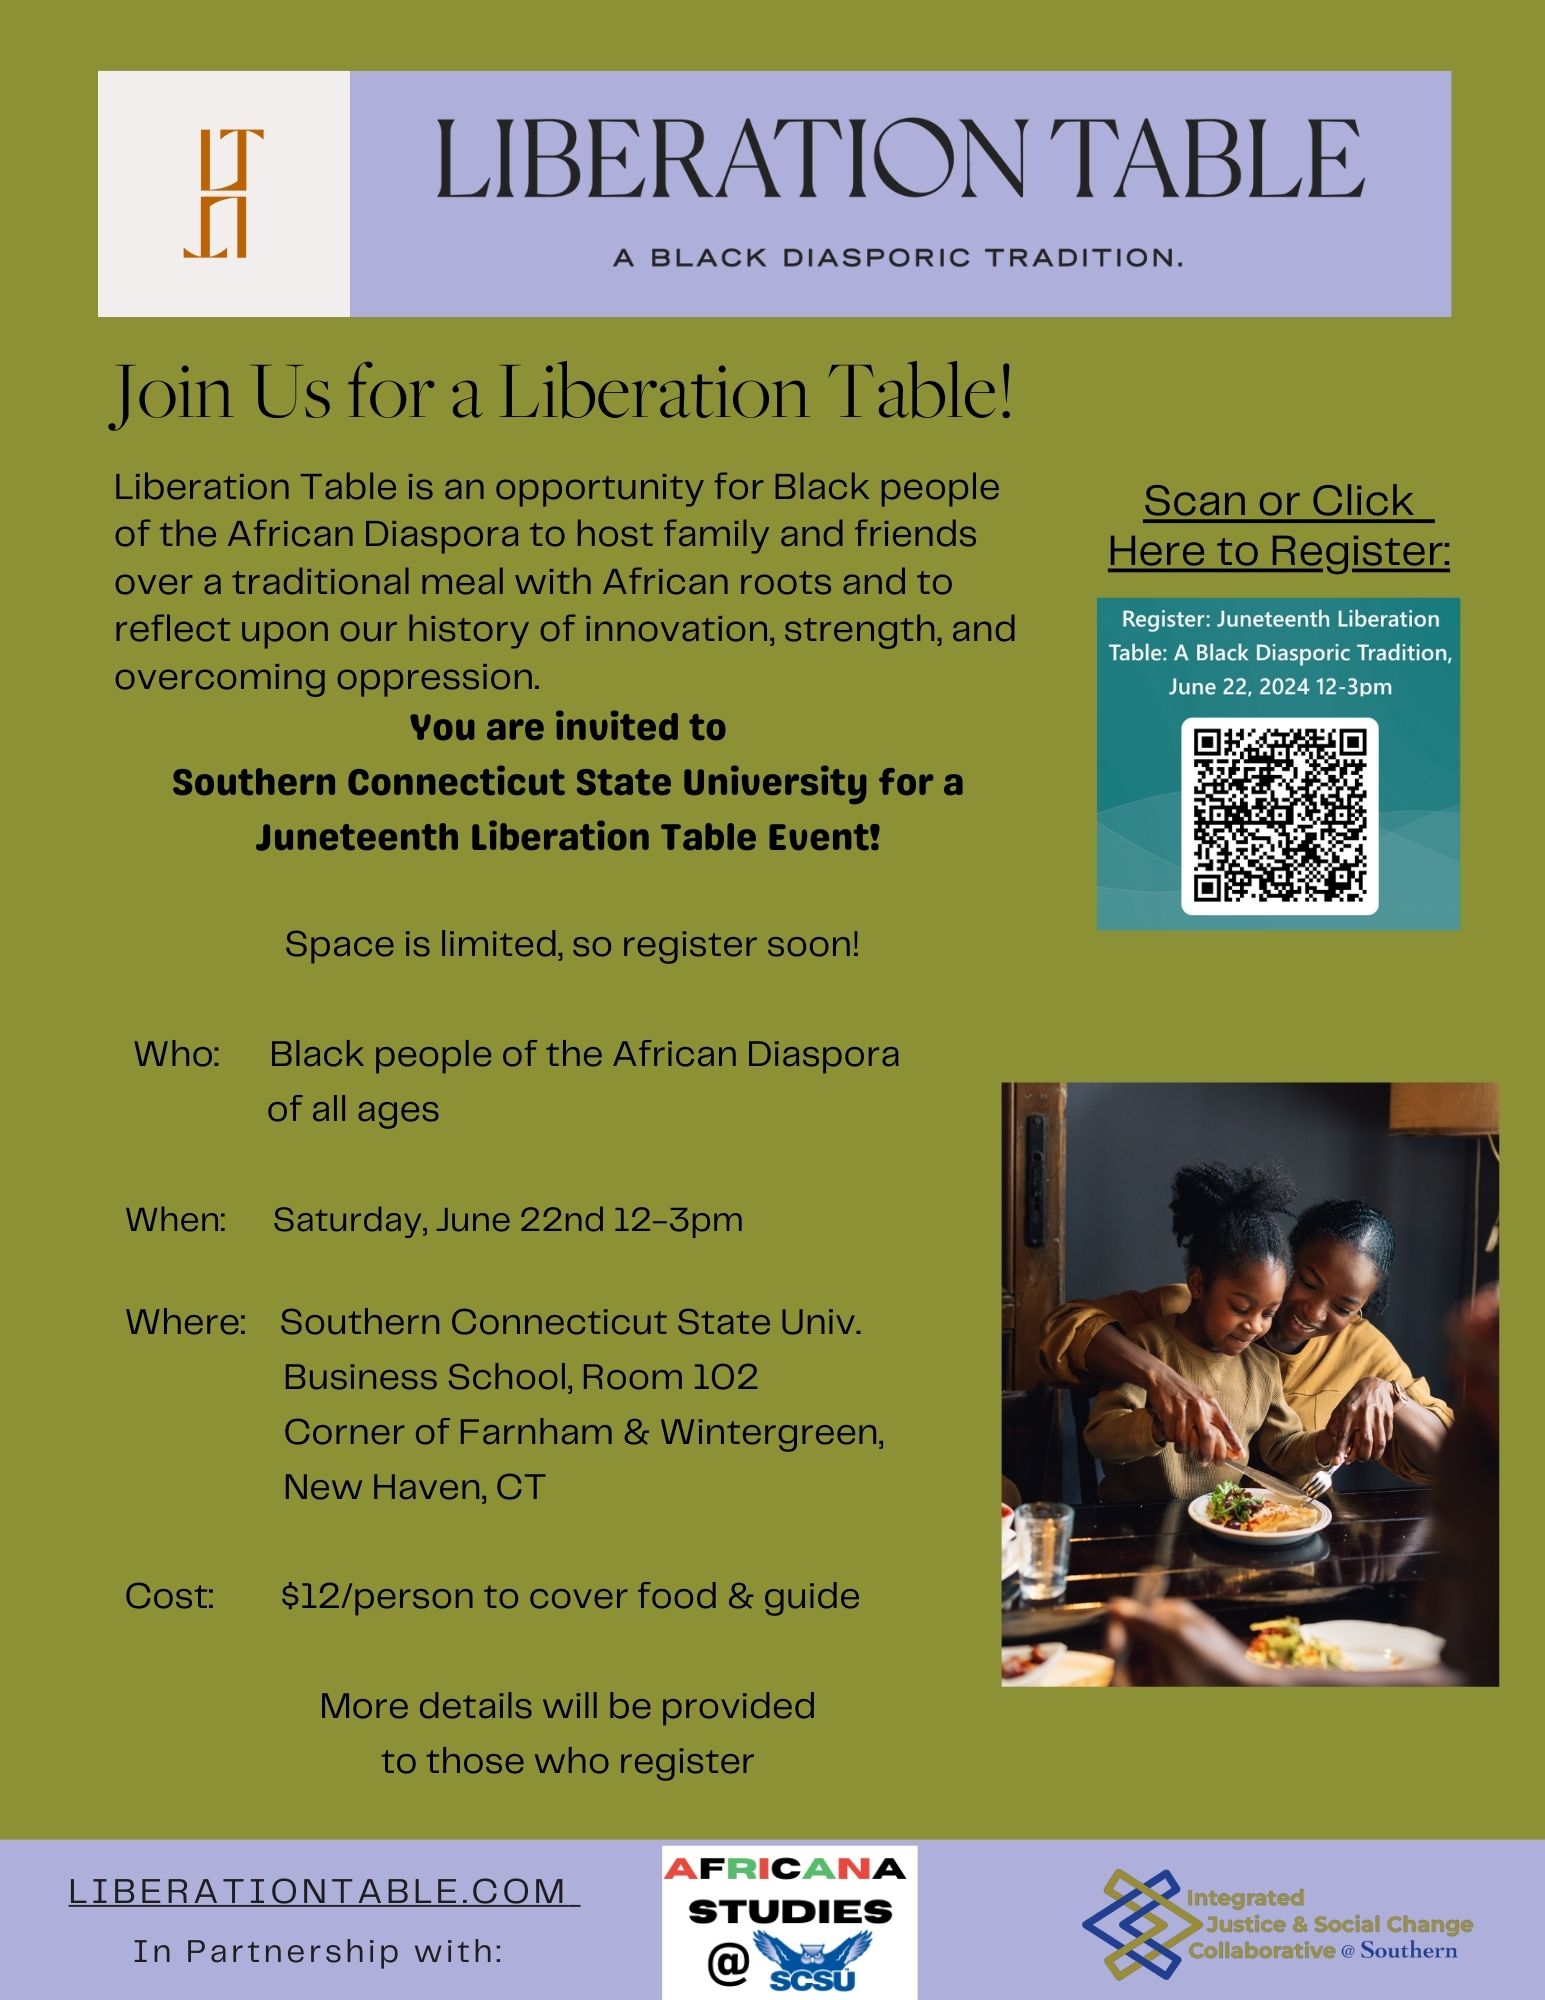 Flier for Juneteenth Liberation Table Brunch, June 22, 2024 12 - 3 pm